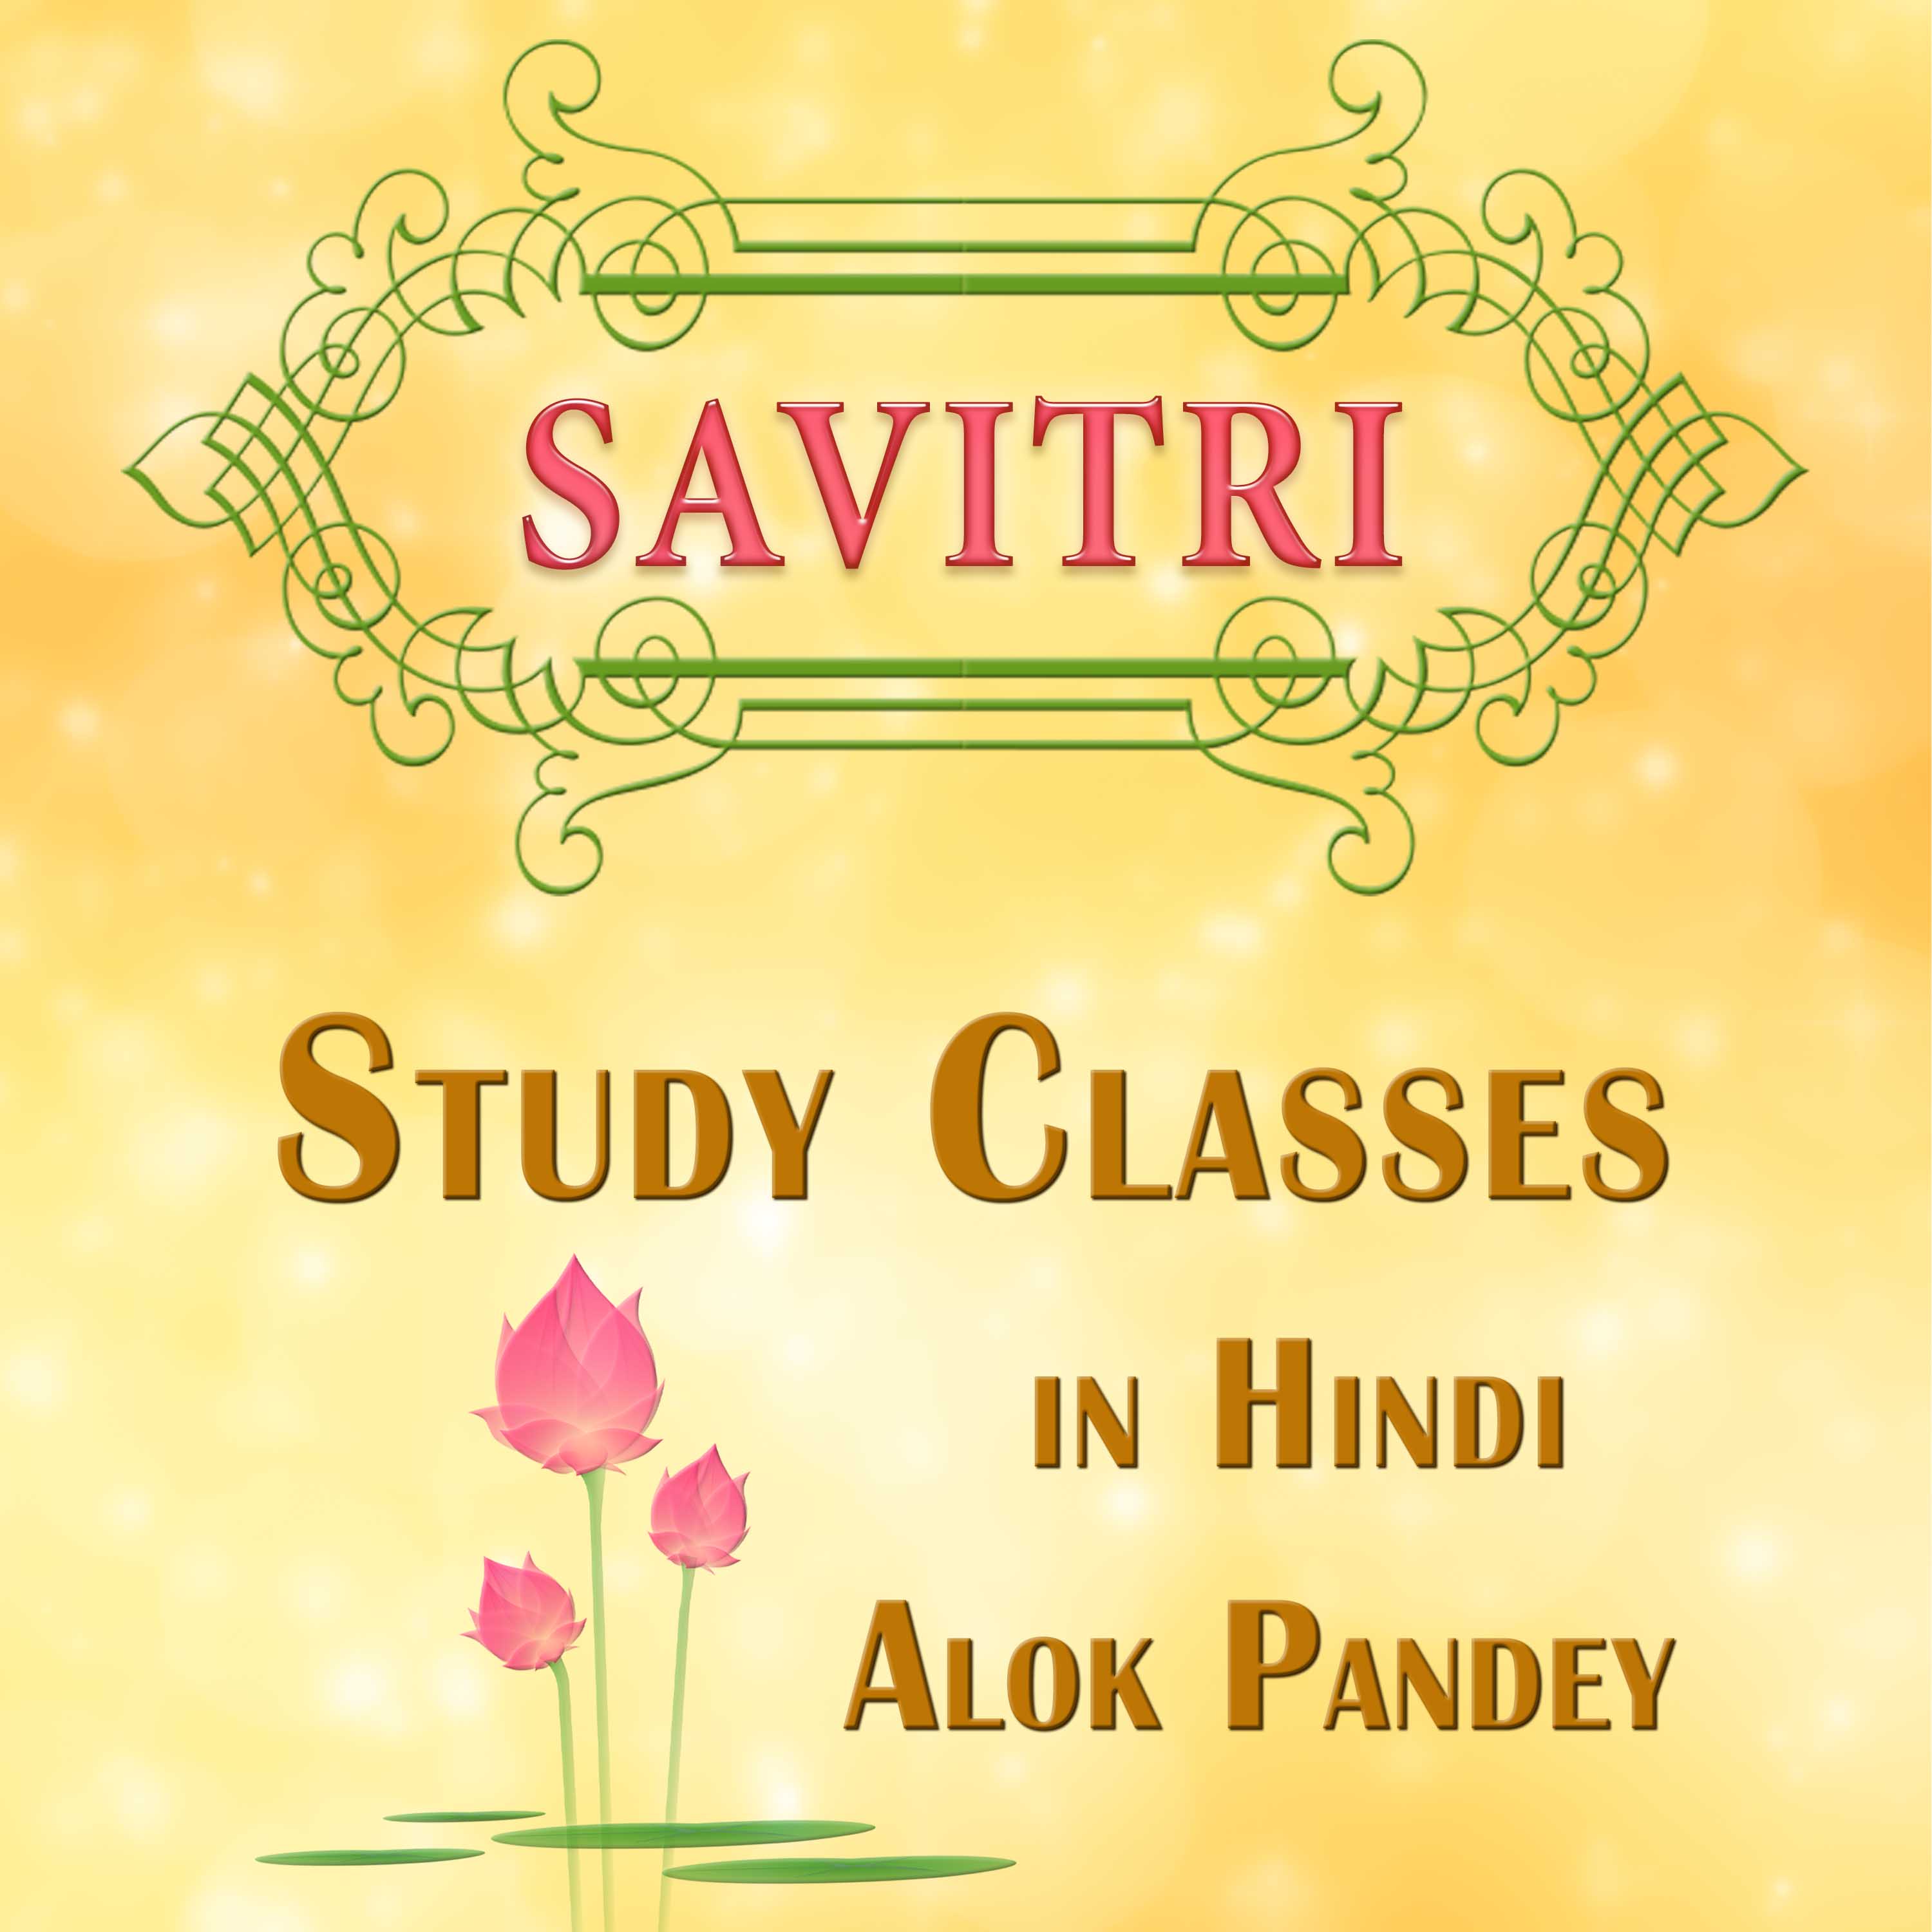 Savitri Study Classes in Hindi